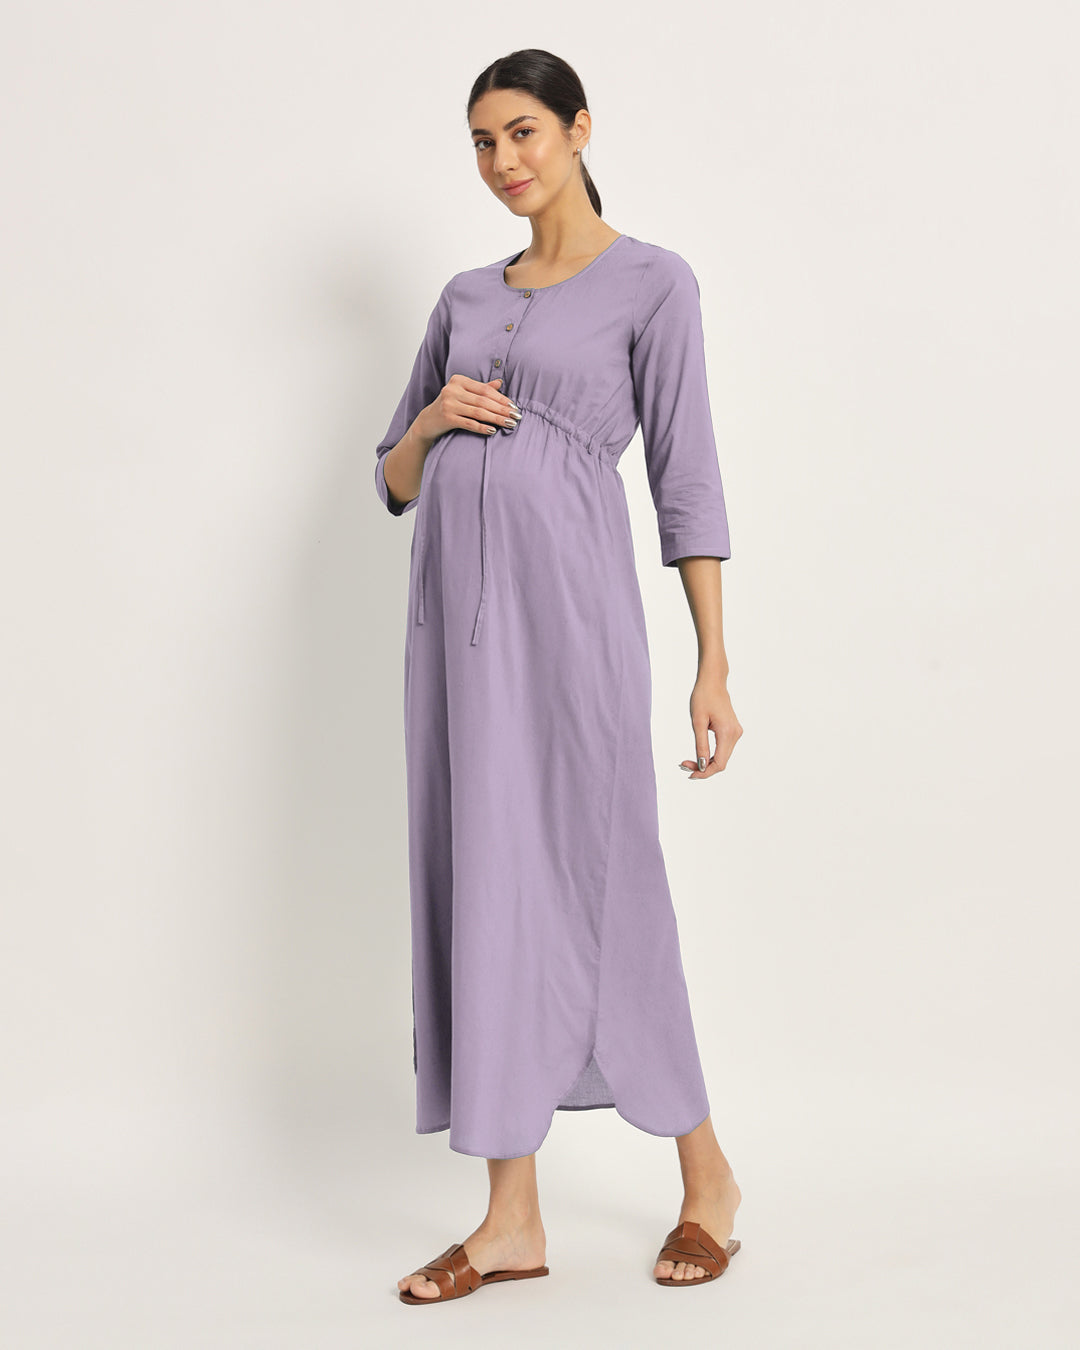 Combo: Lilac & Wisteria Purple Oh Mama! Maternity & Nursing Dress